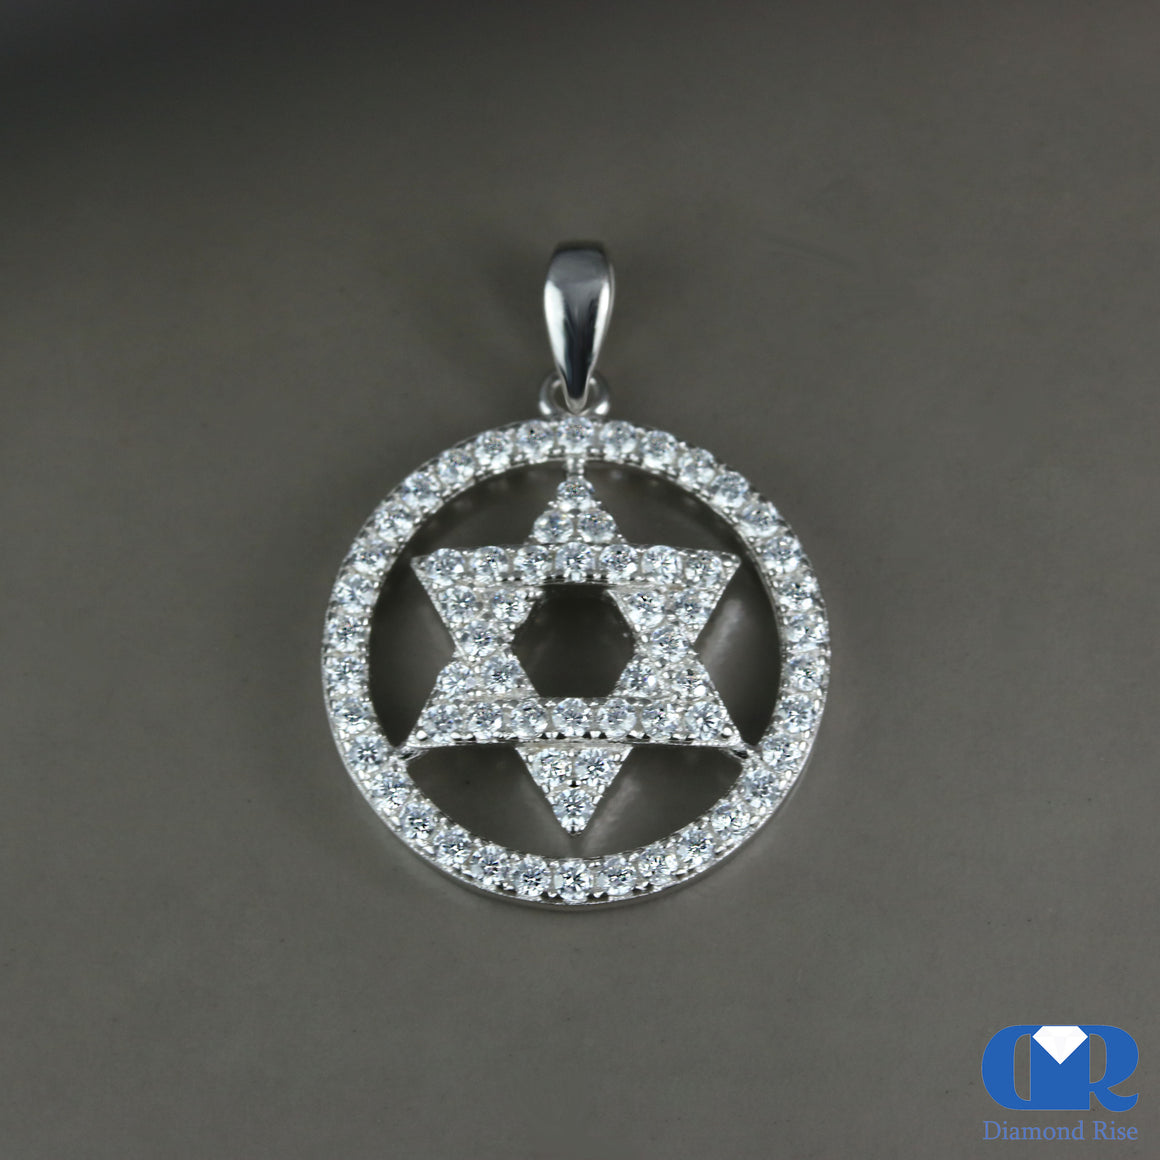 Diamond Star Pendant In 14k White Gold - Diamond Rise Jewelry